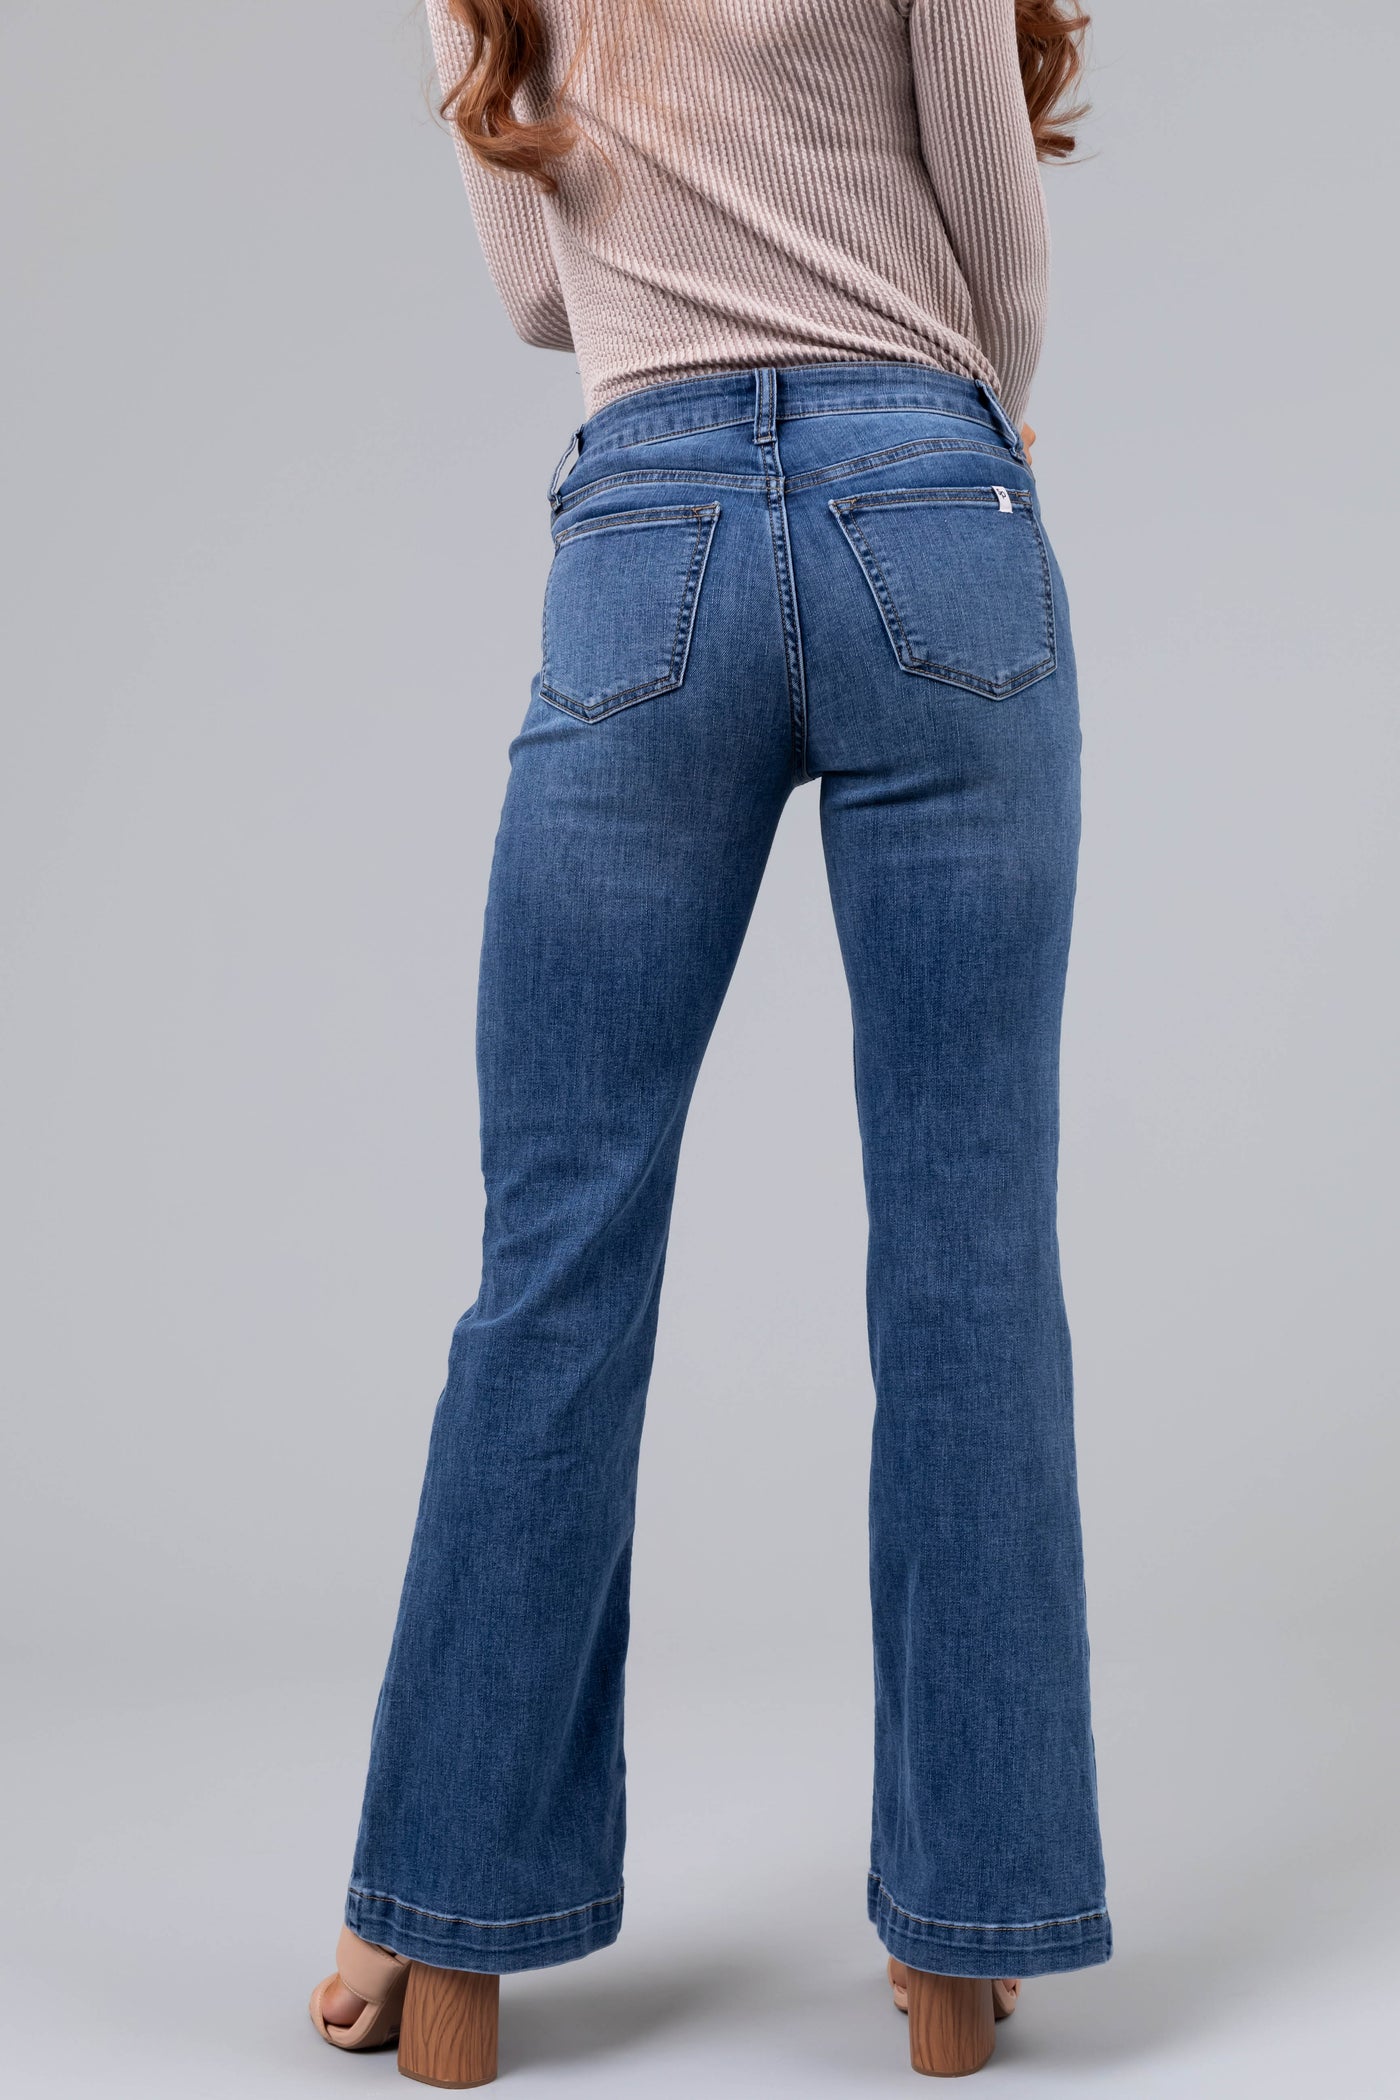 Sneak Peek Medium Wash Mid Rise Flare Jeans